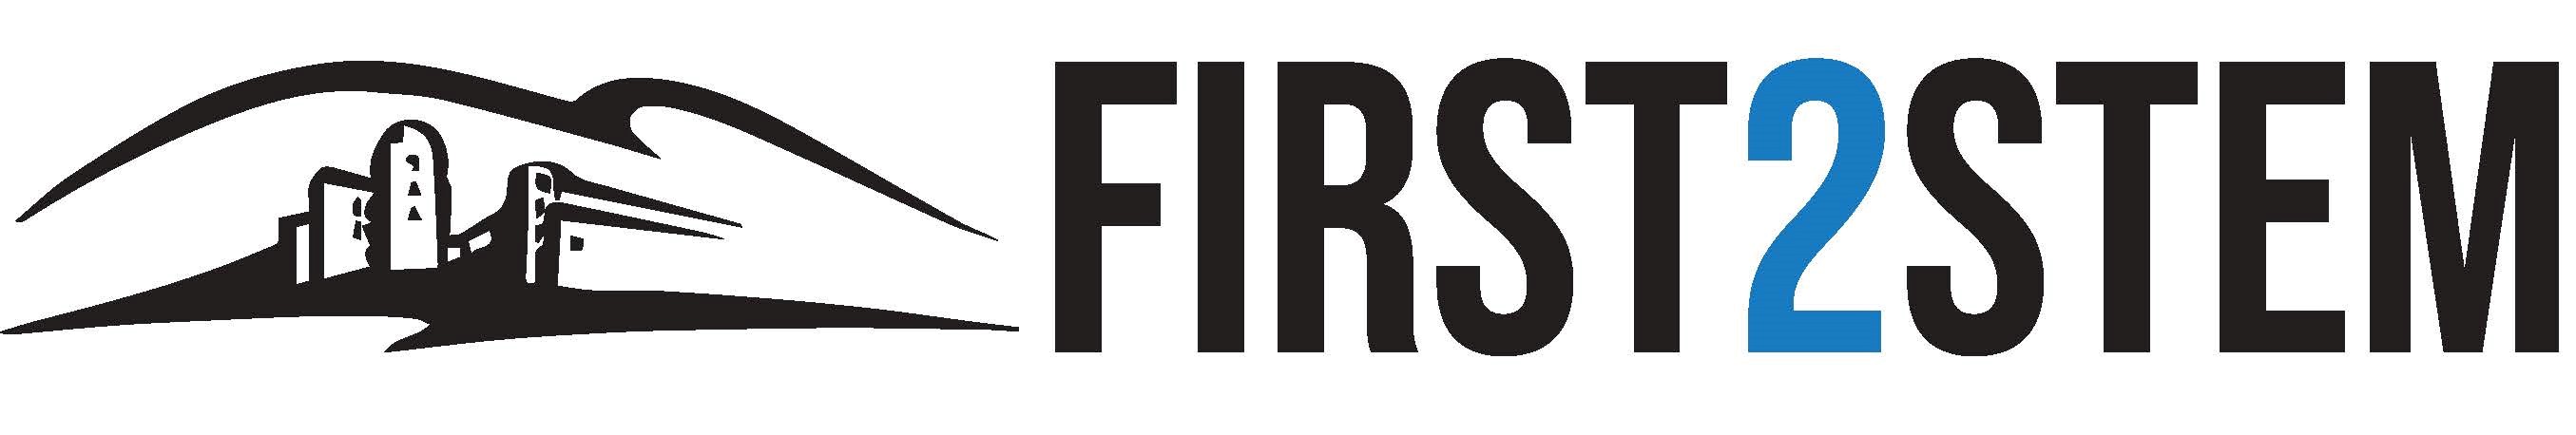 FIRST2STEM logo